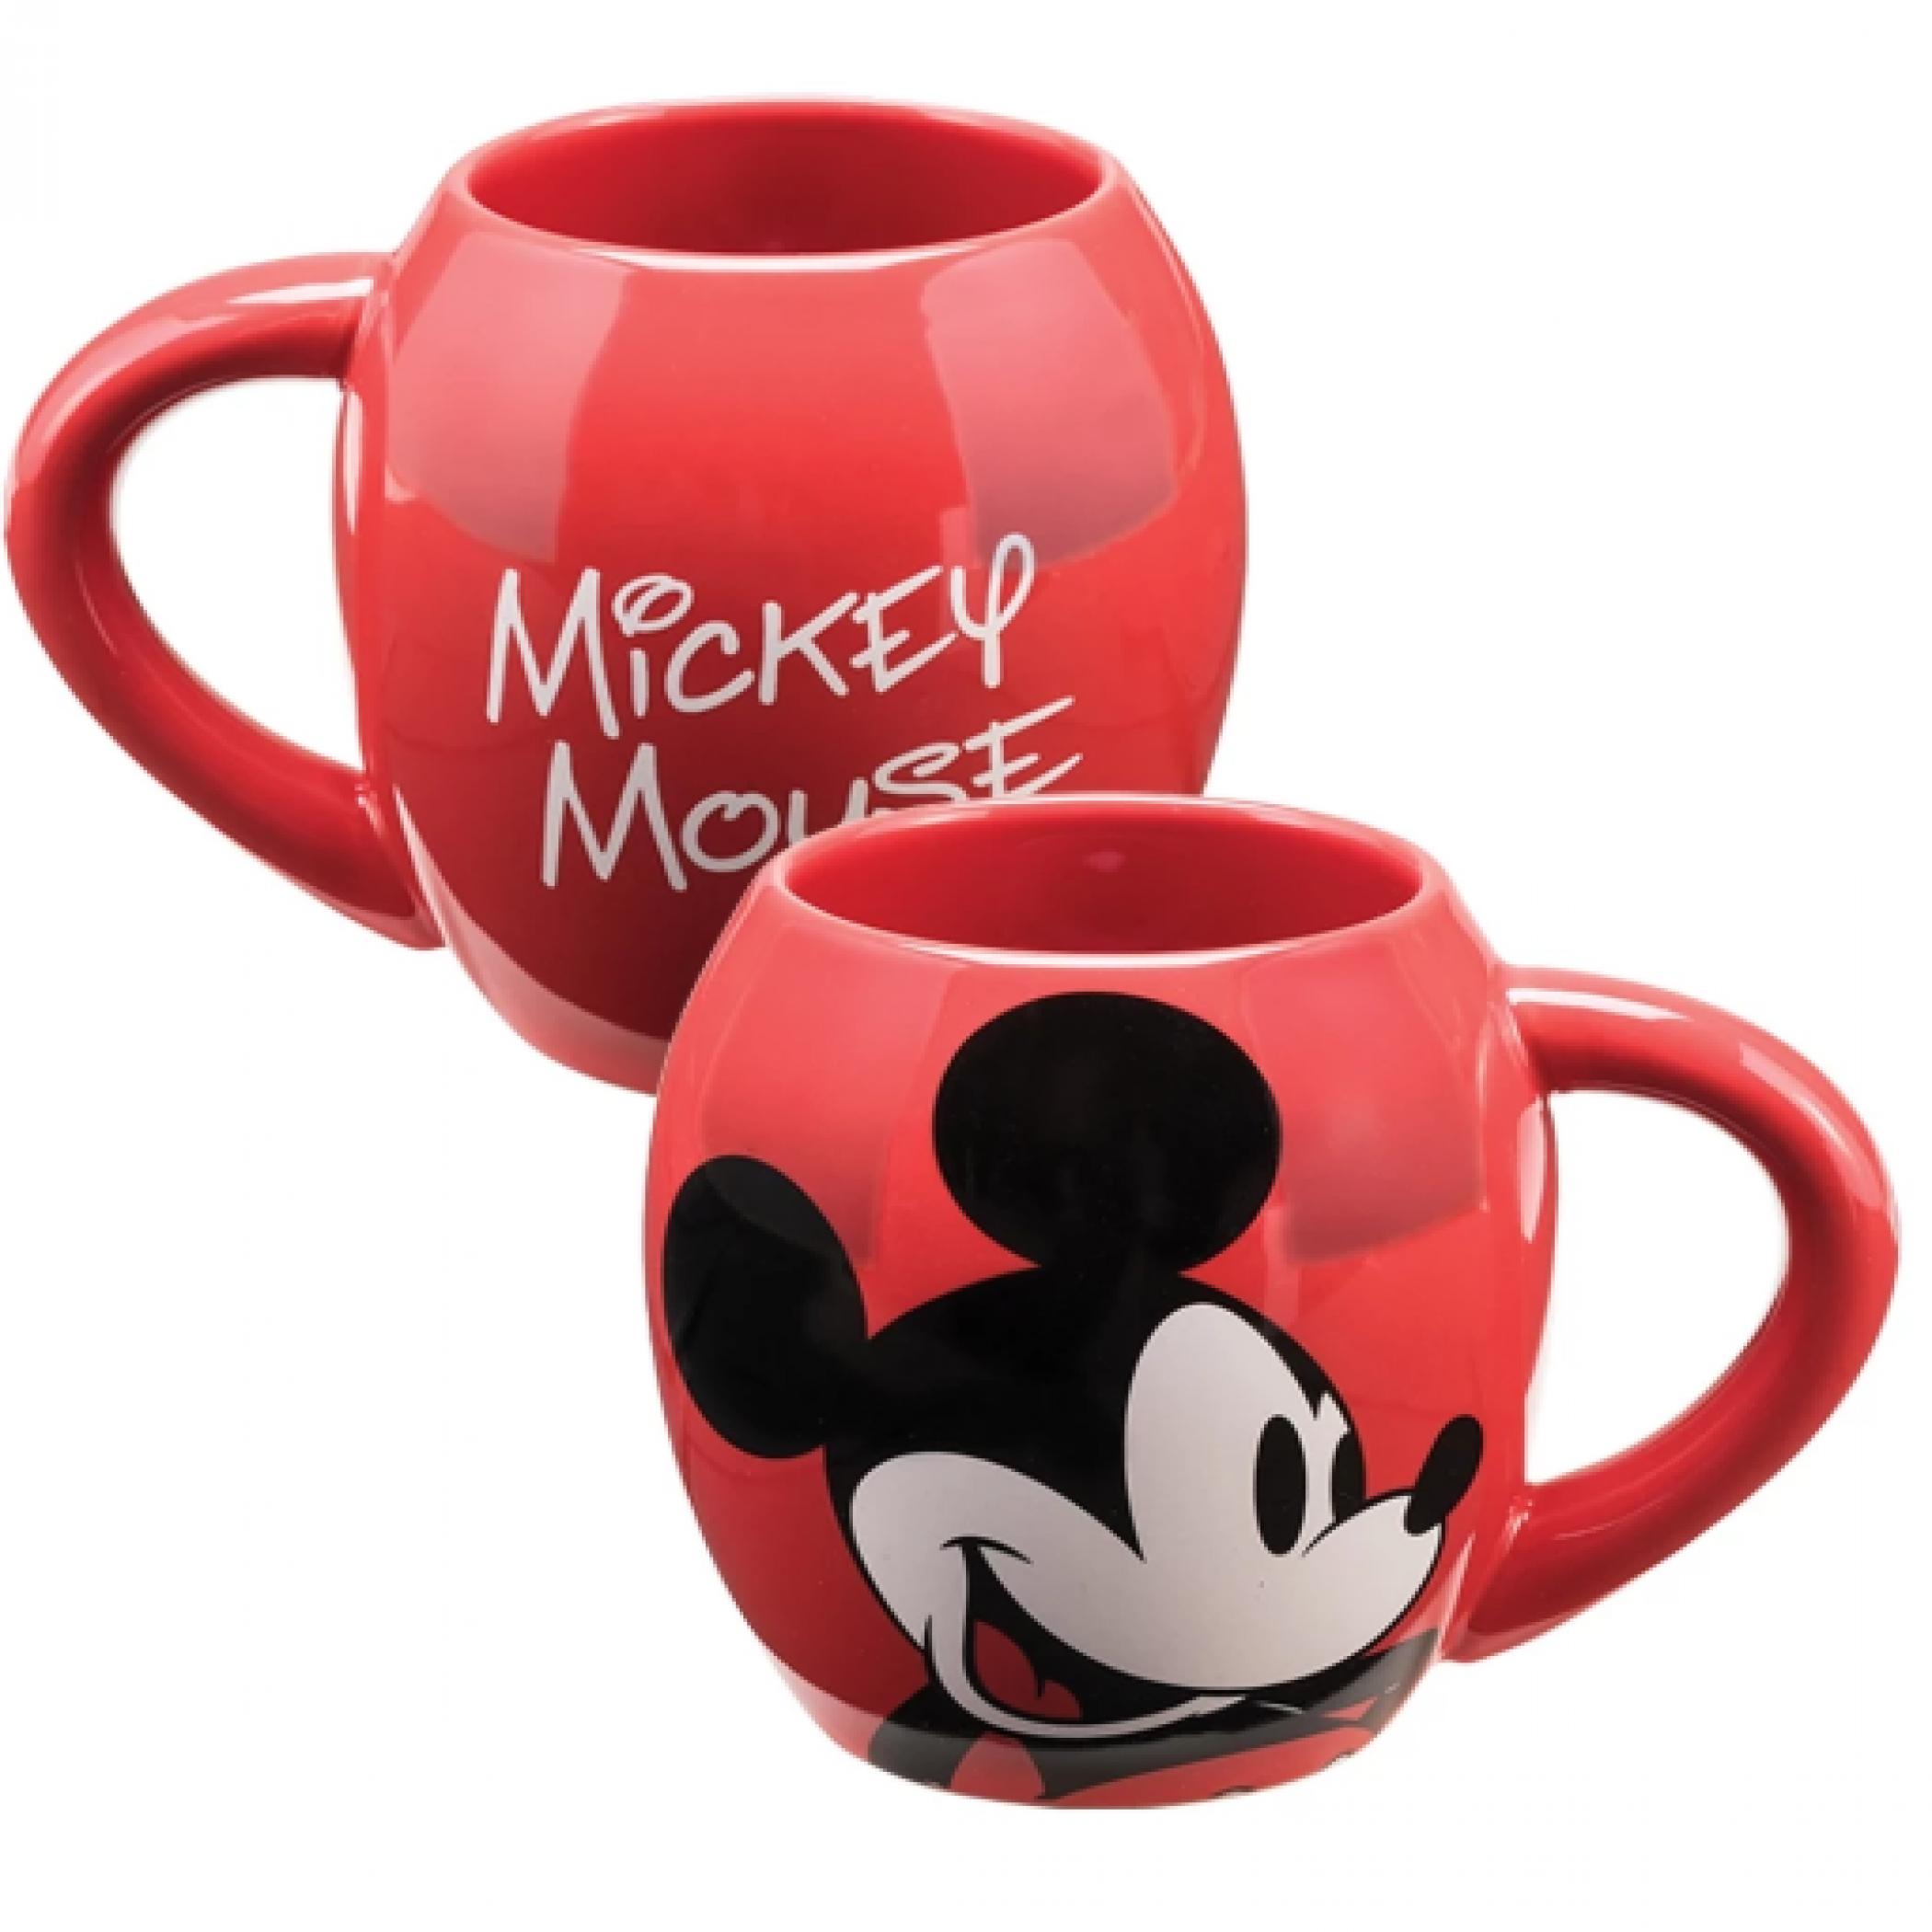 Mickey Mouse 18-Ounce Red Ceramic Mug